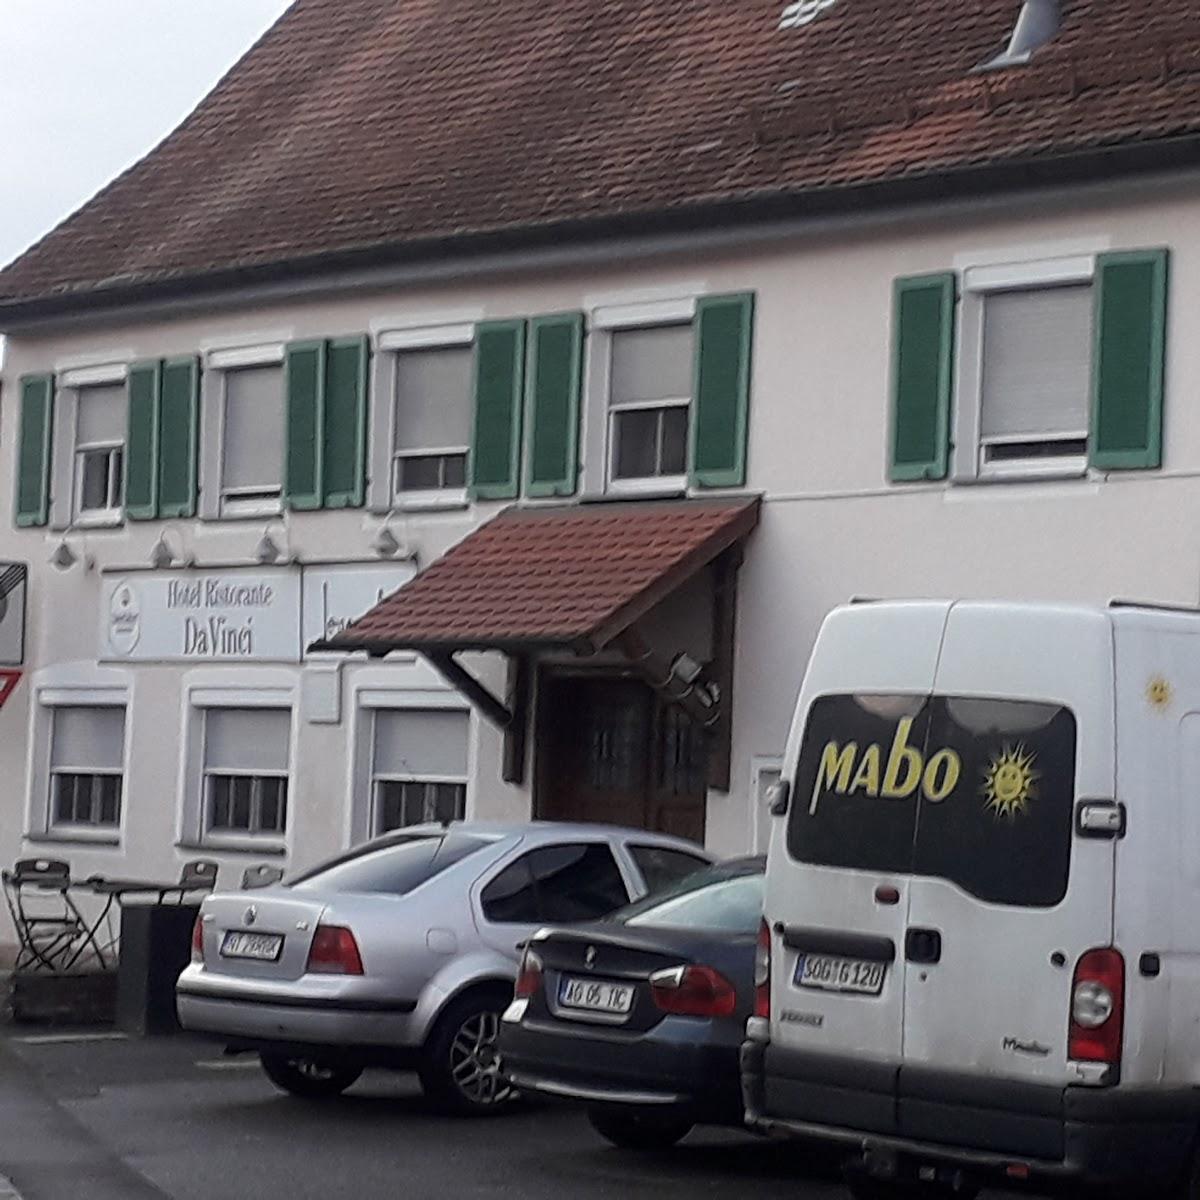 Restaurant "Hotel Ristorante Adler" in Erbach